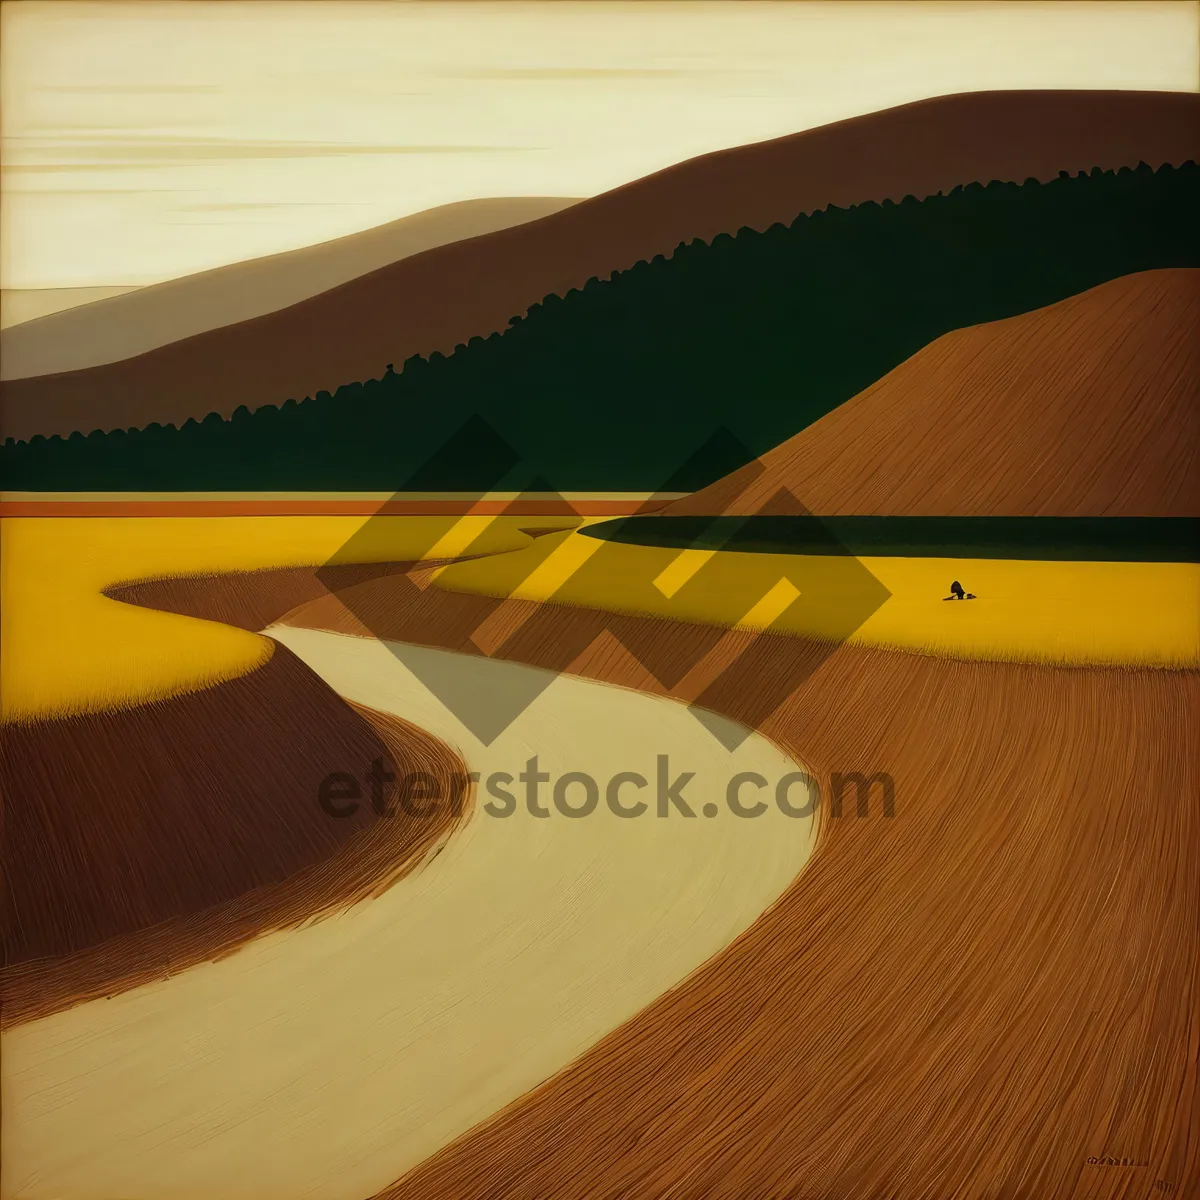 Picture of Sandy Dune Landscape Under the Summer Sun